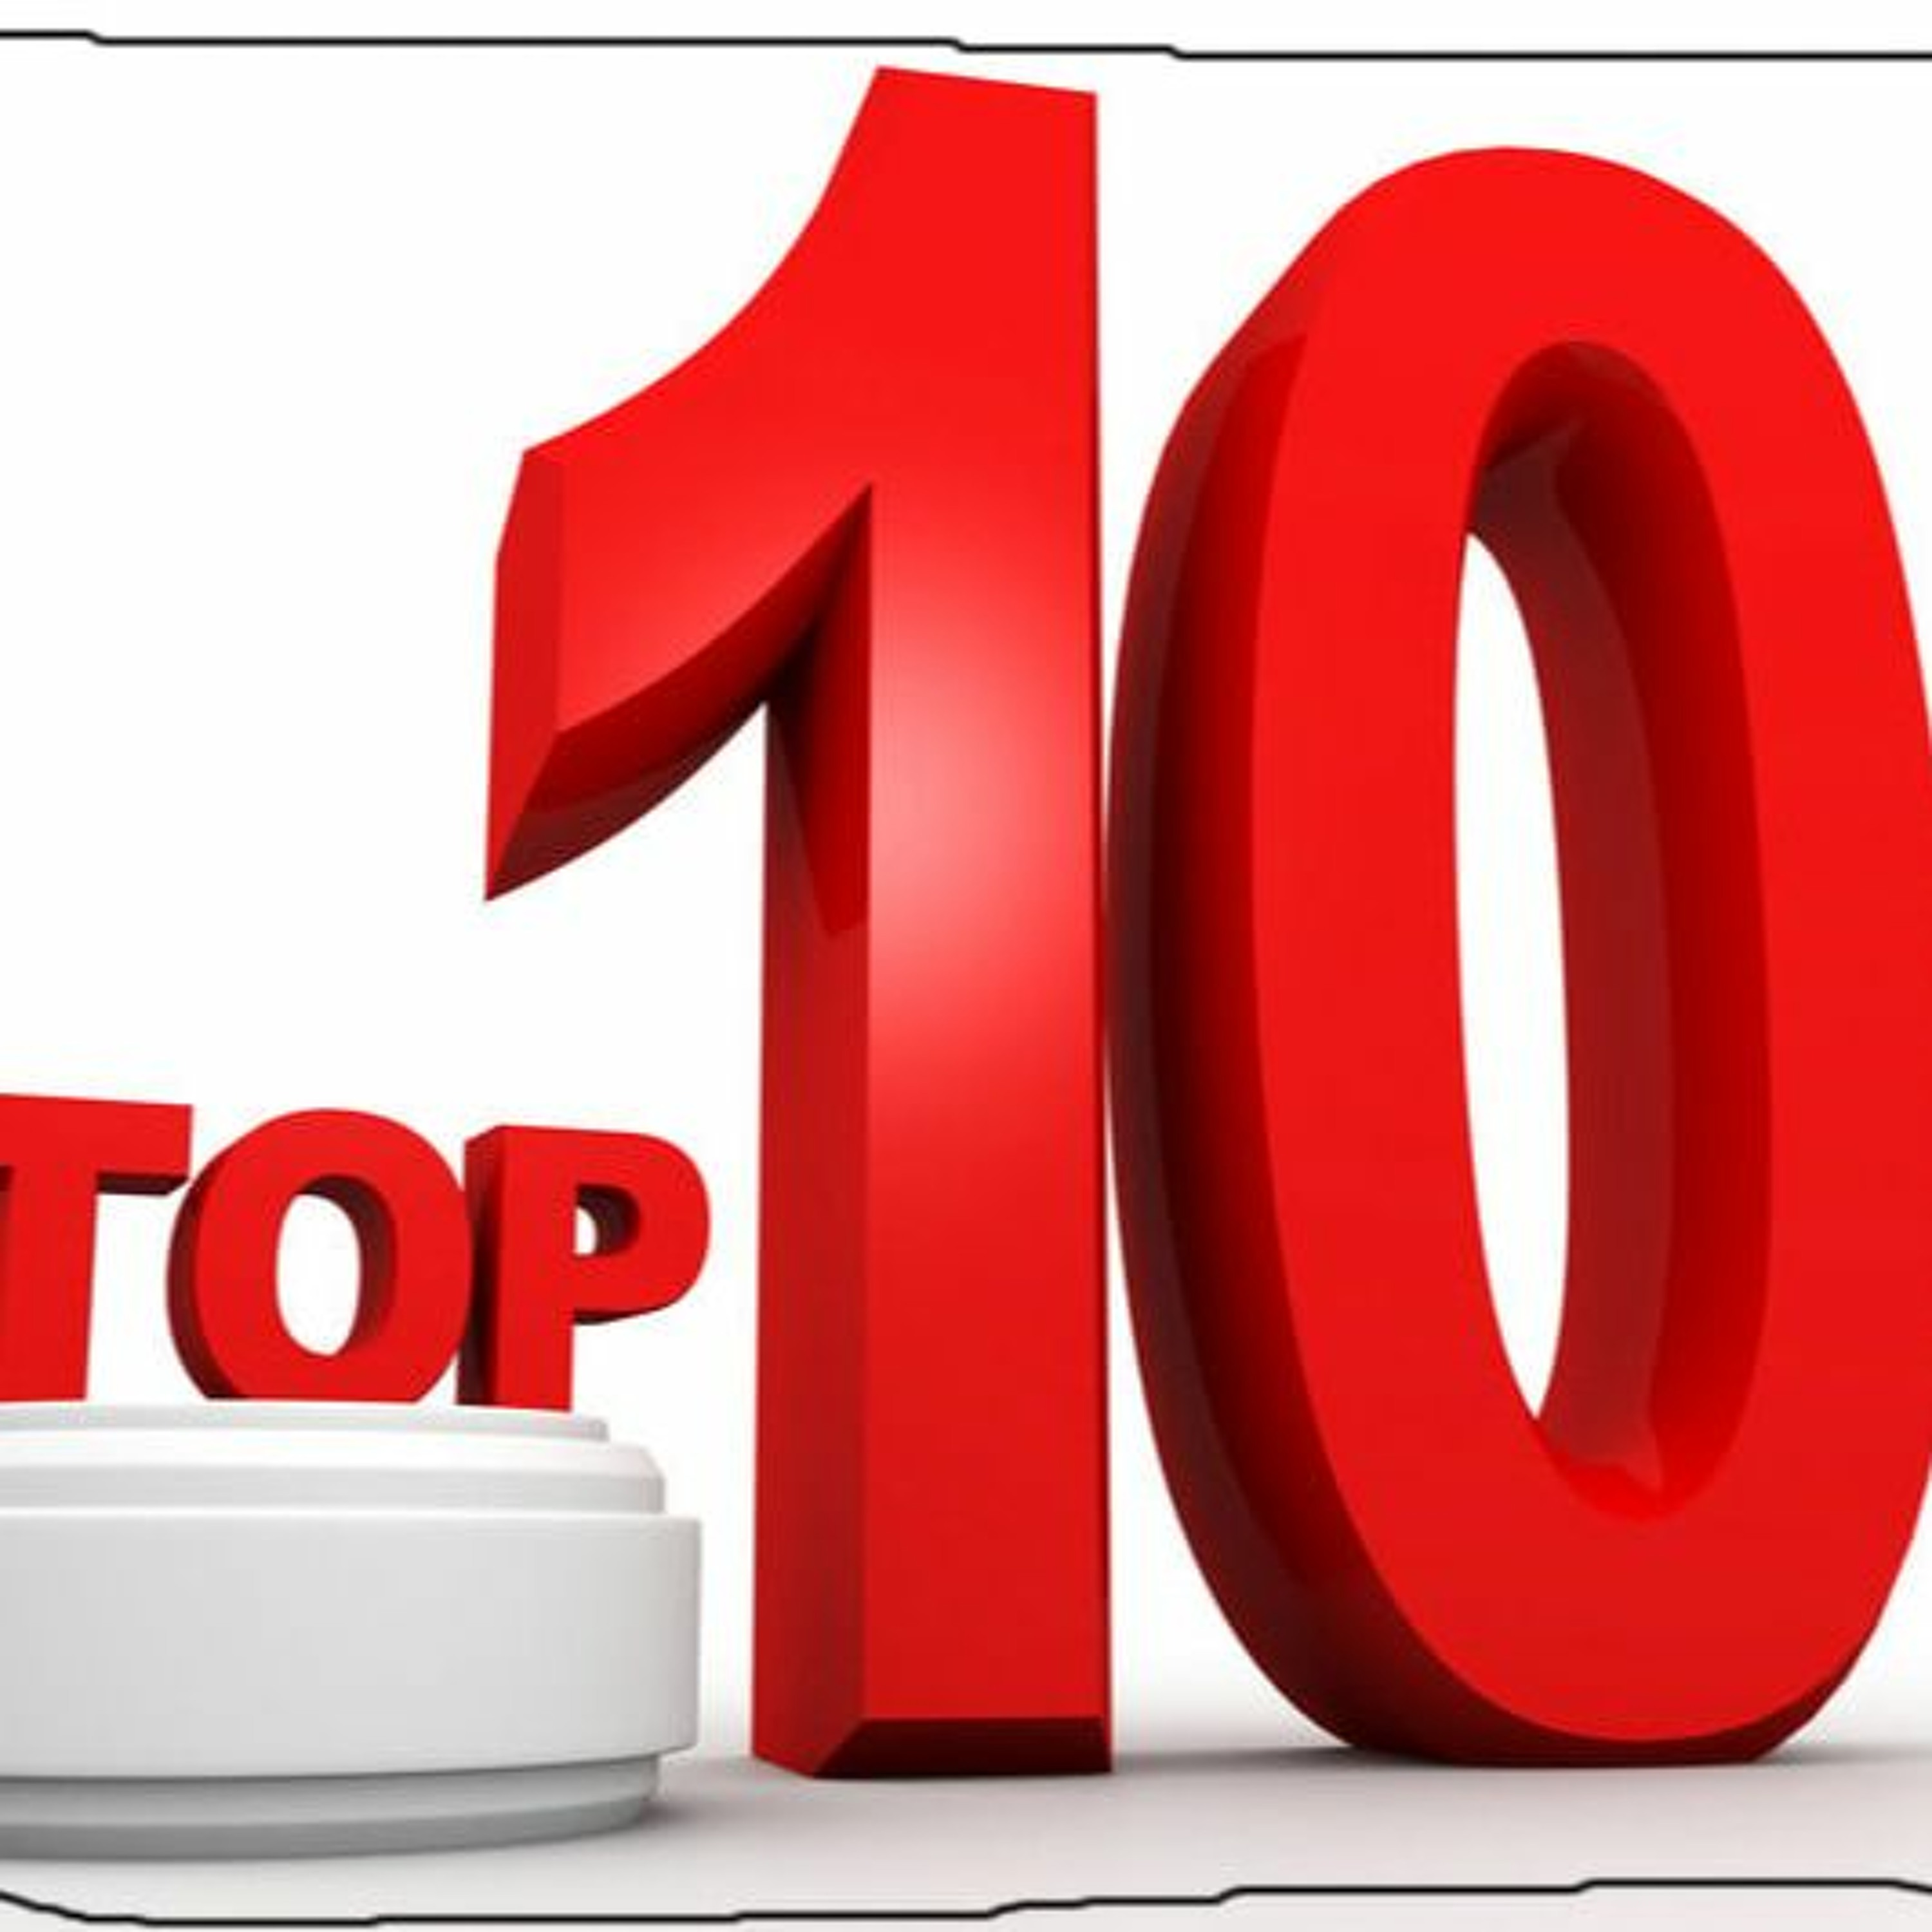 103: Top Ten at a Stock Show